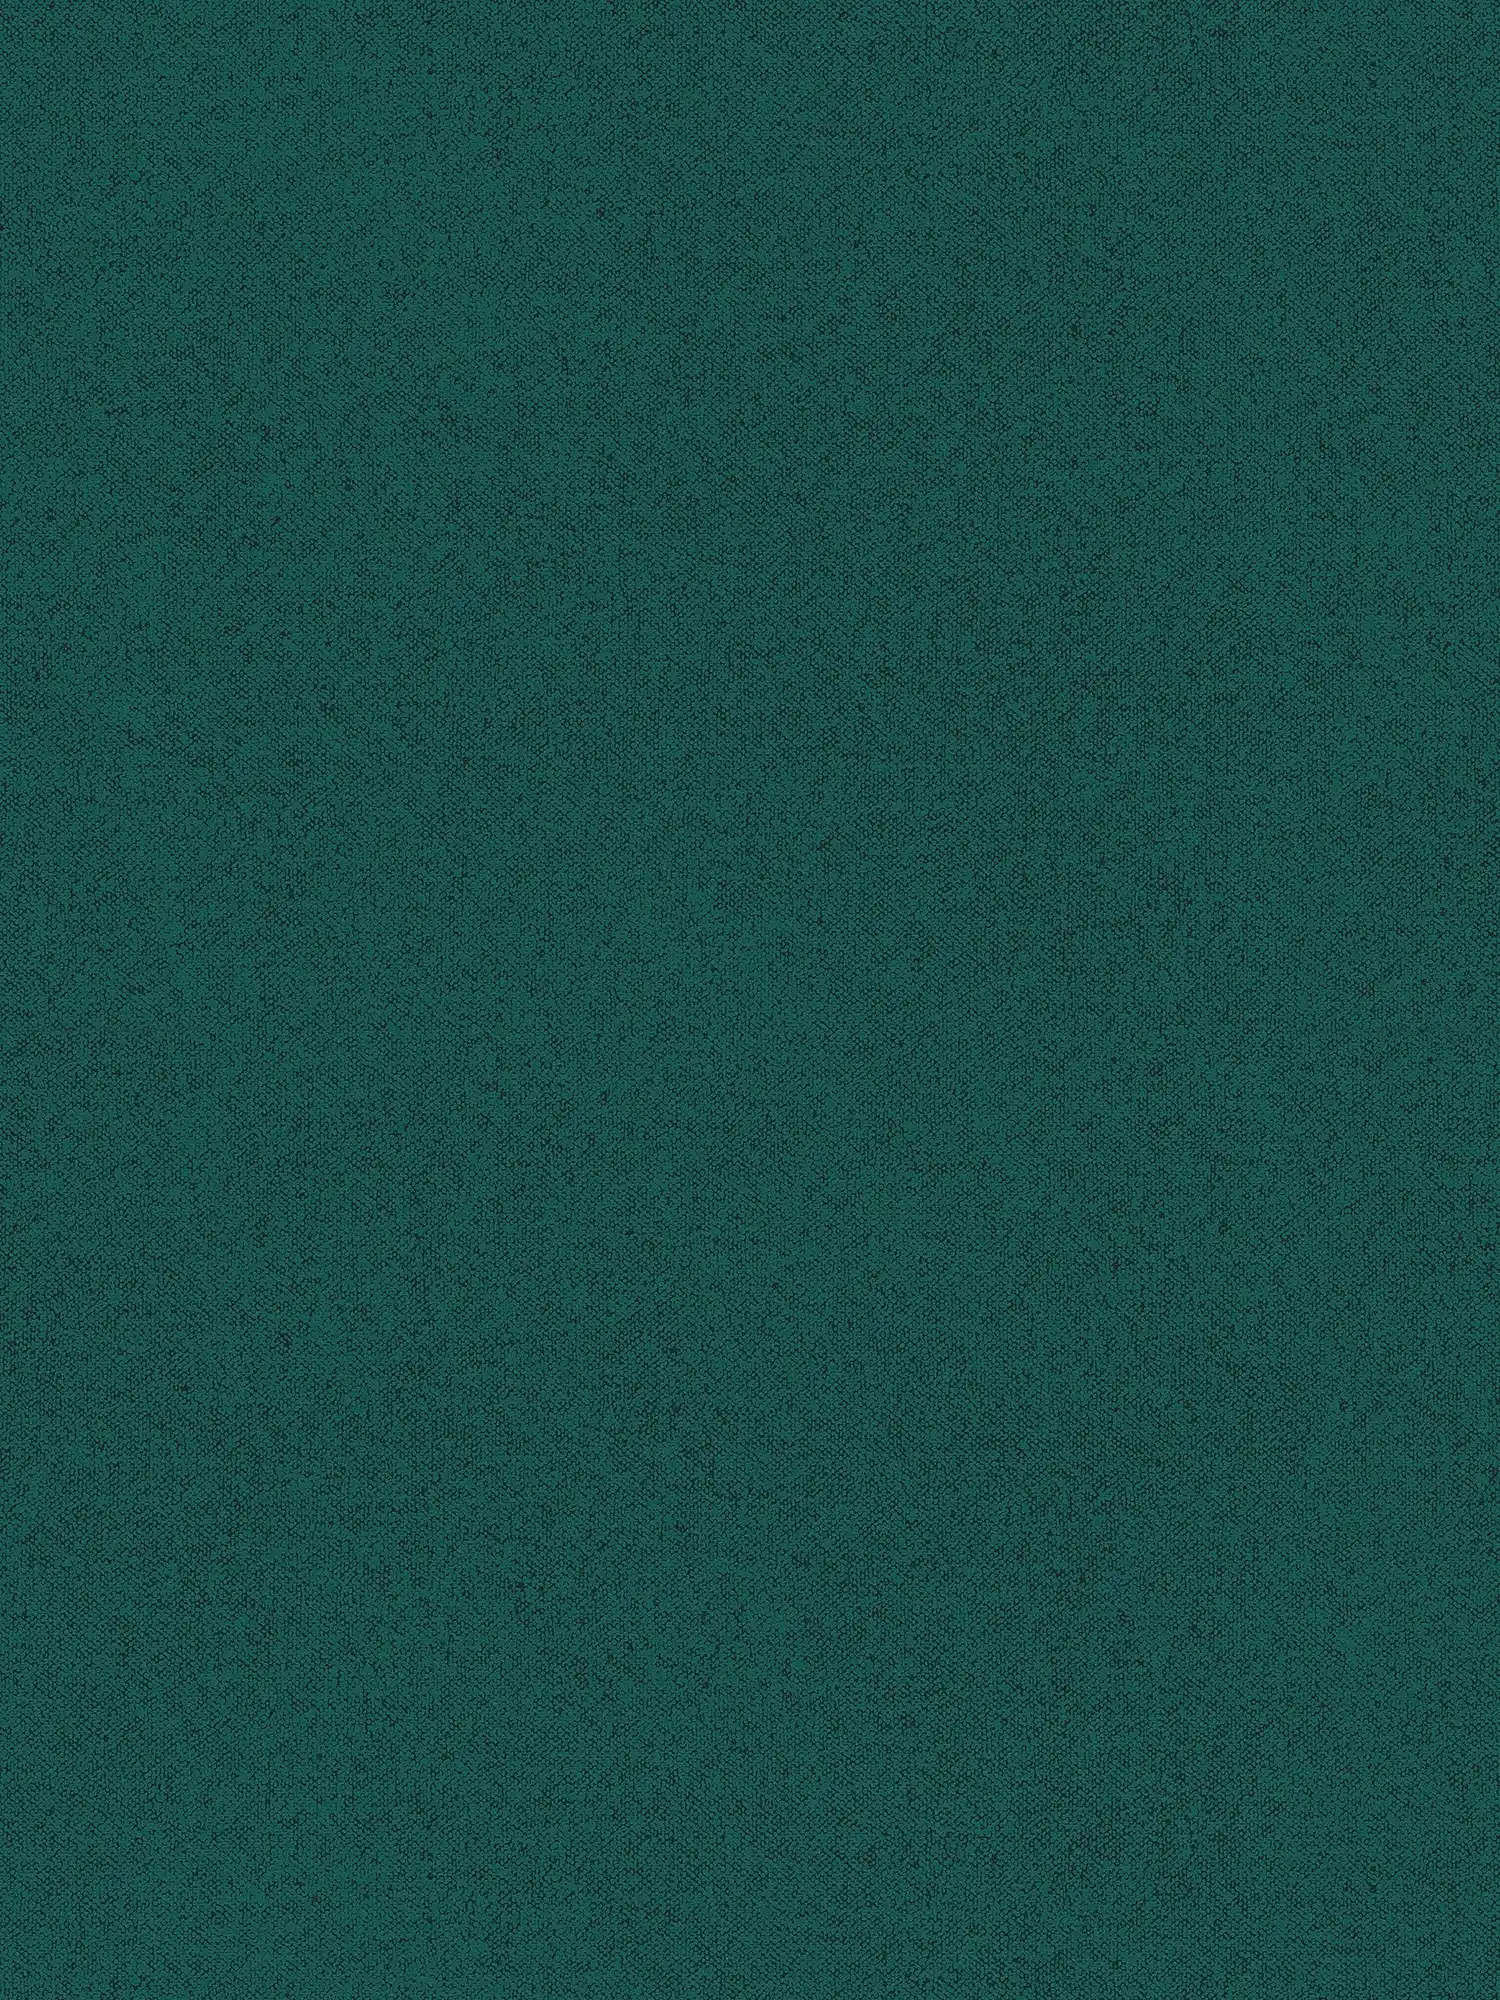 Plain textured wallpaper with linen look - green
